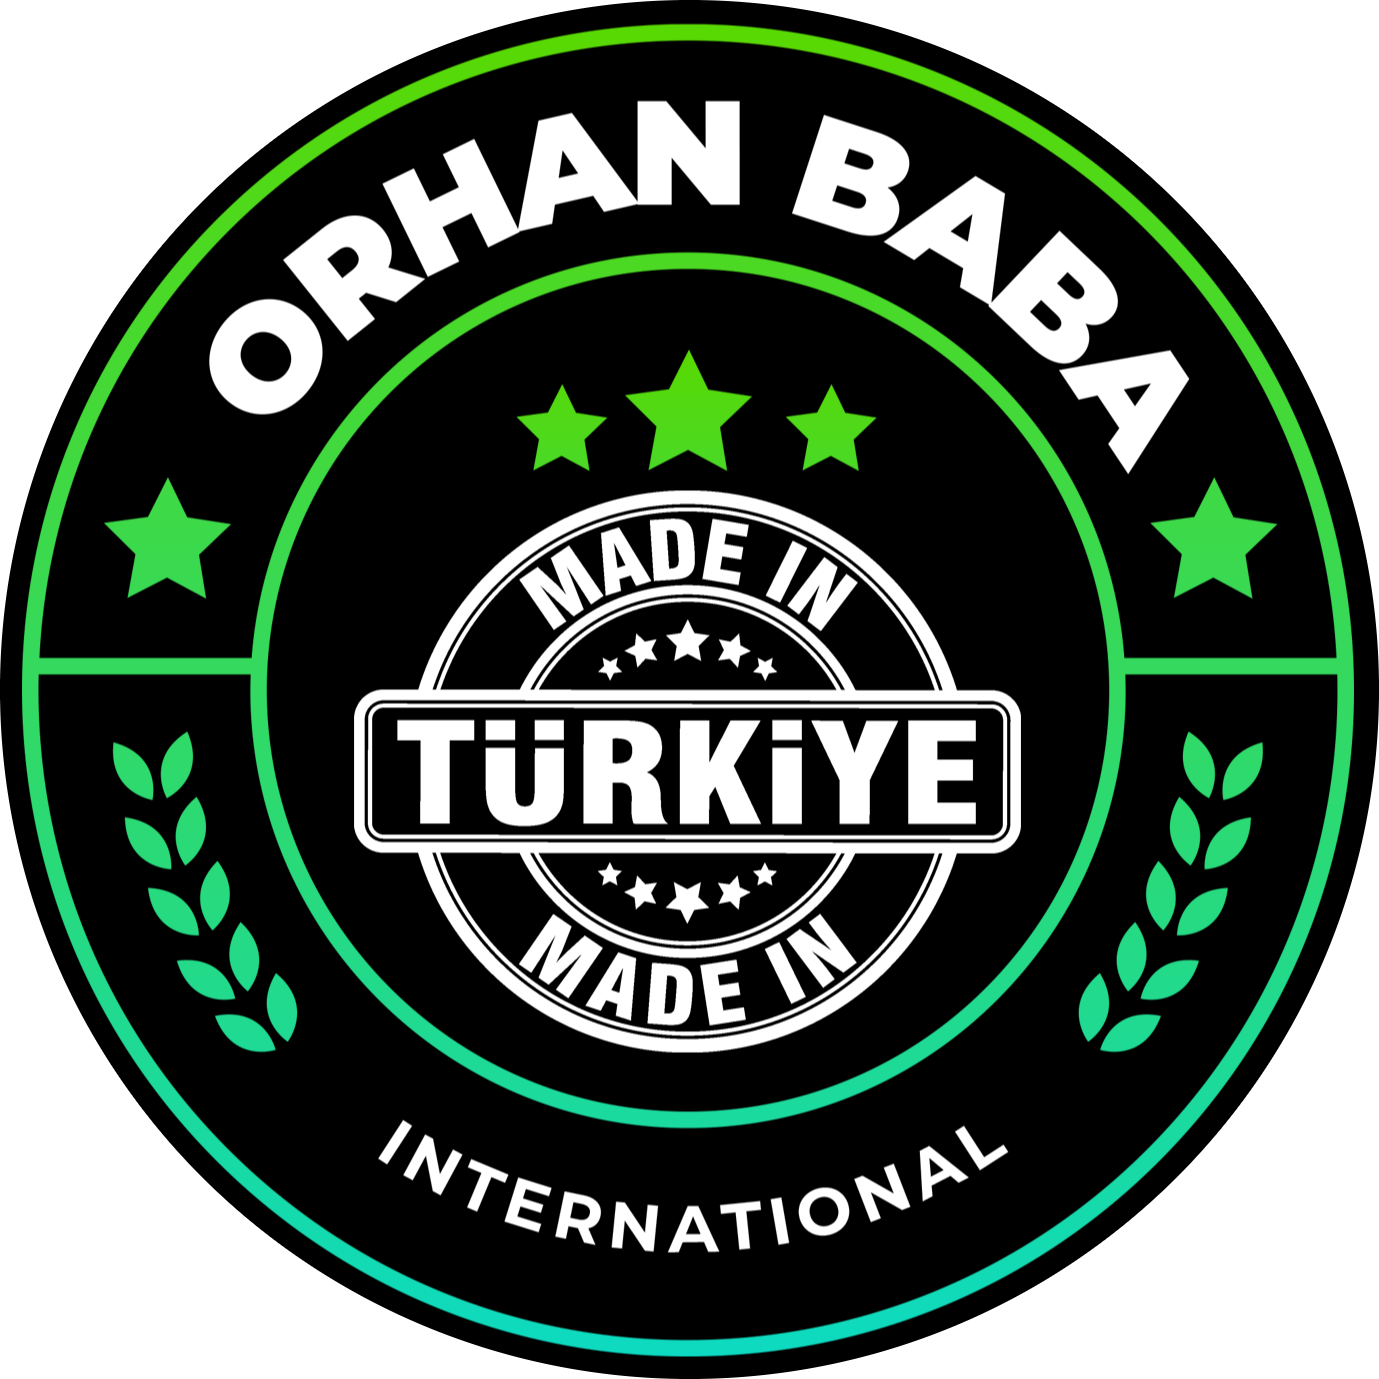 Orhan Baba International